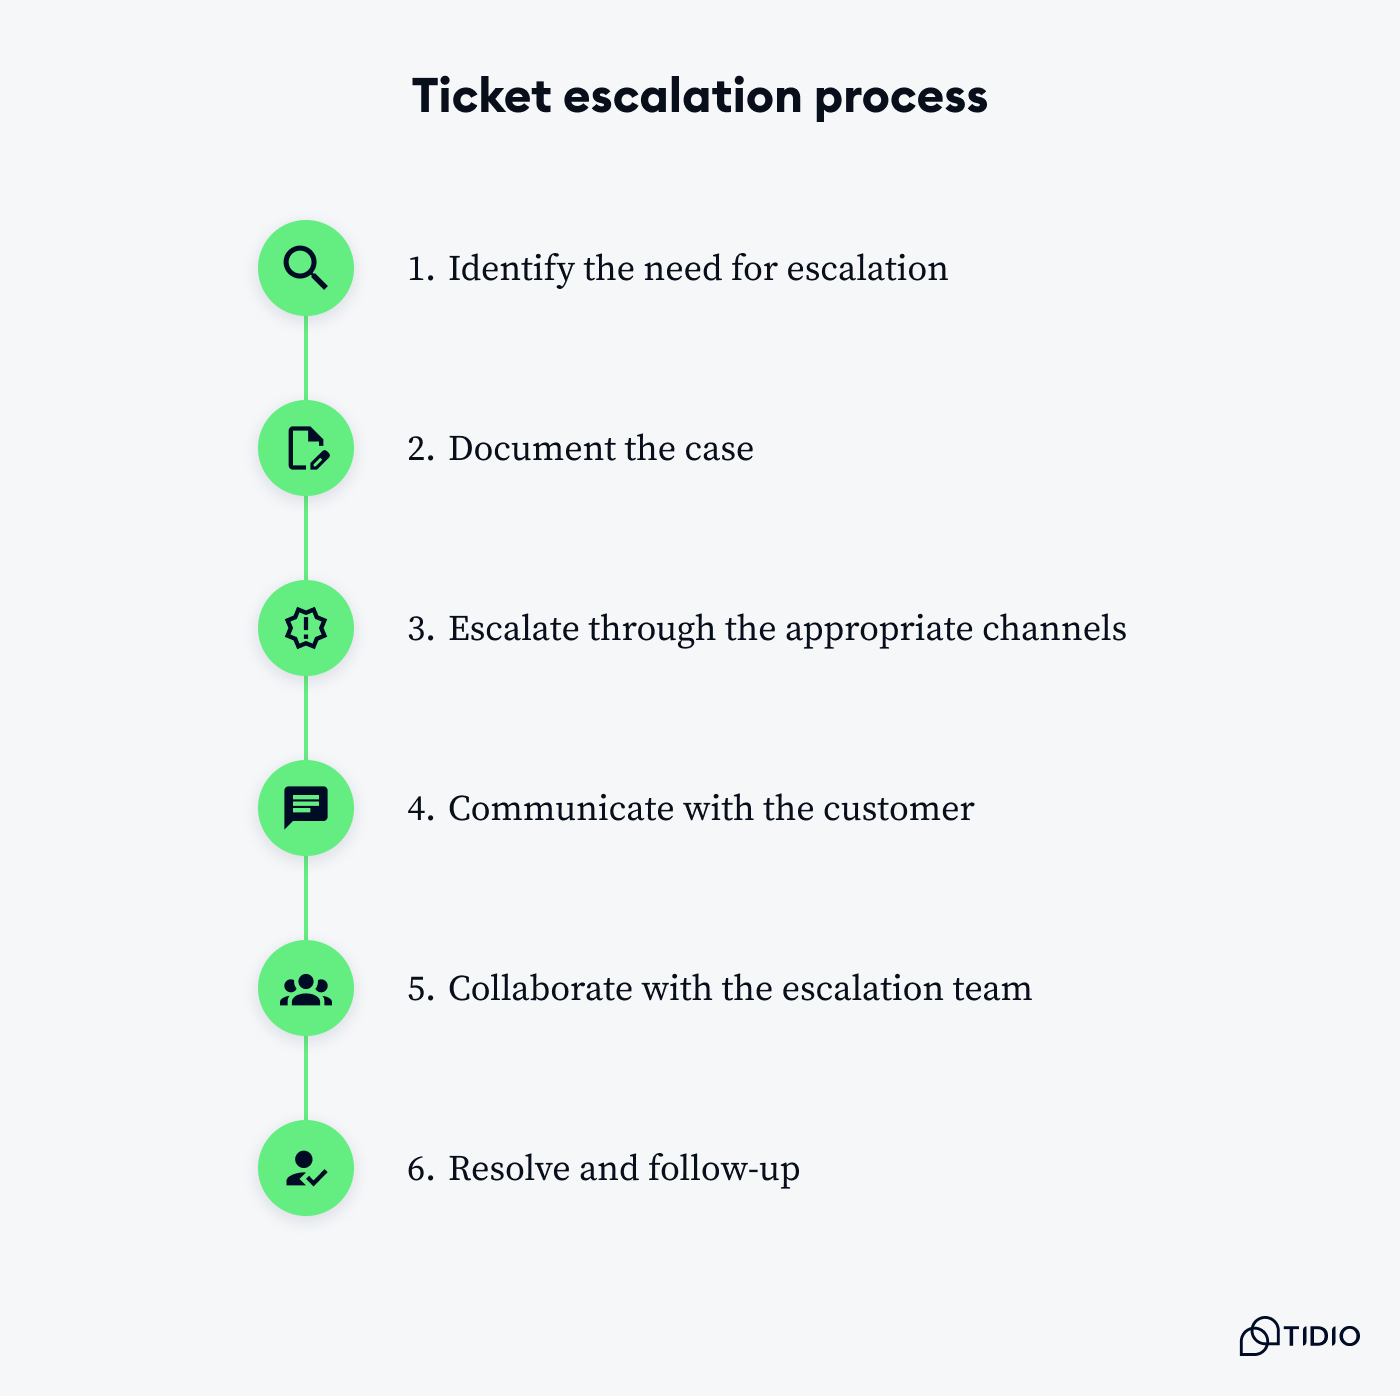 ticket escalation process on image